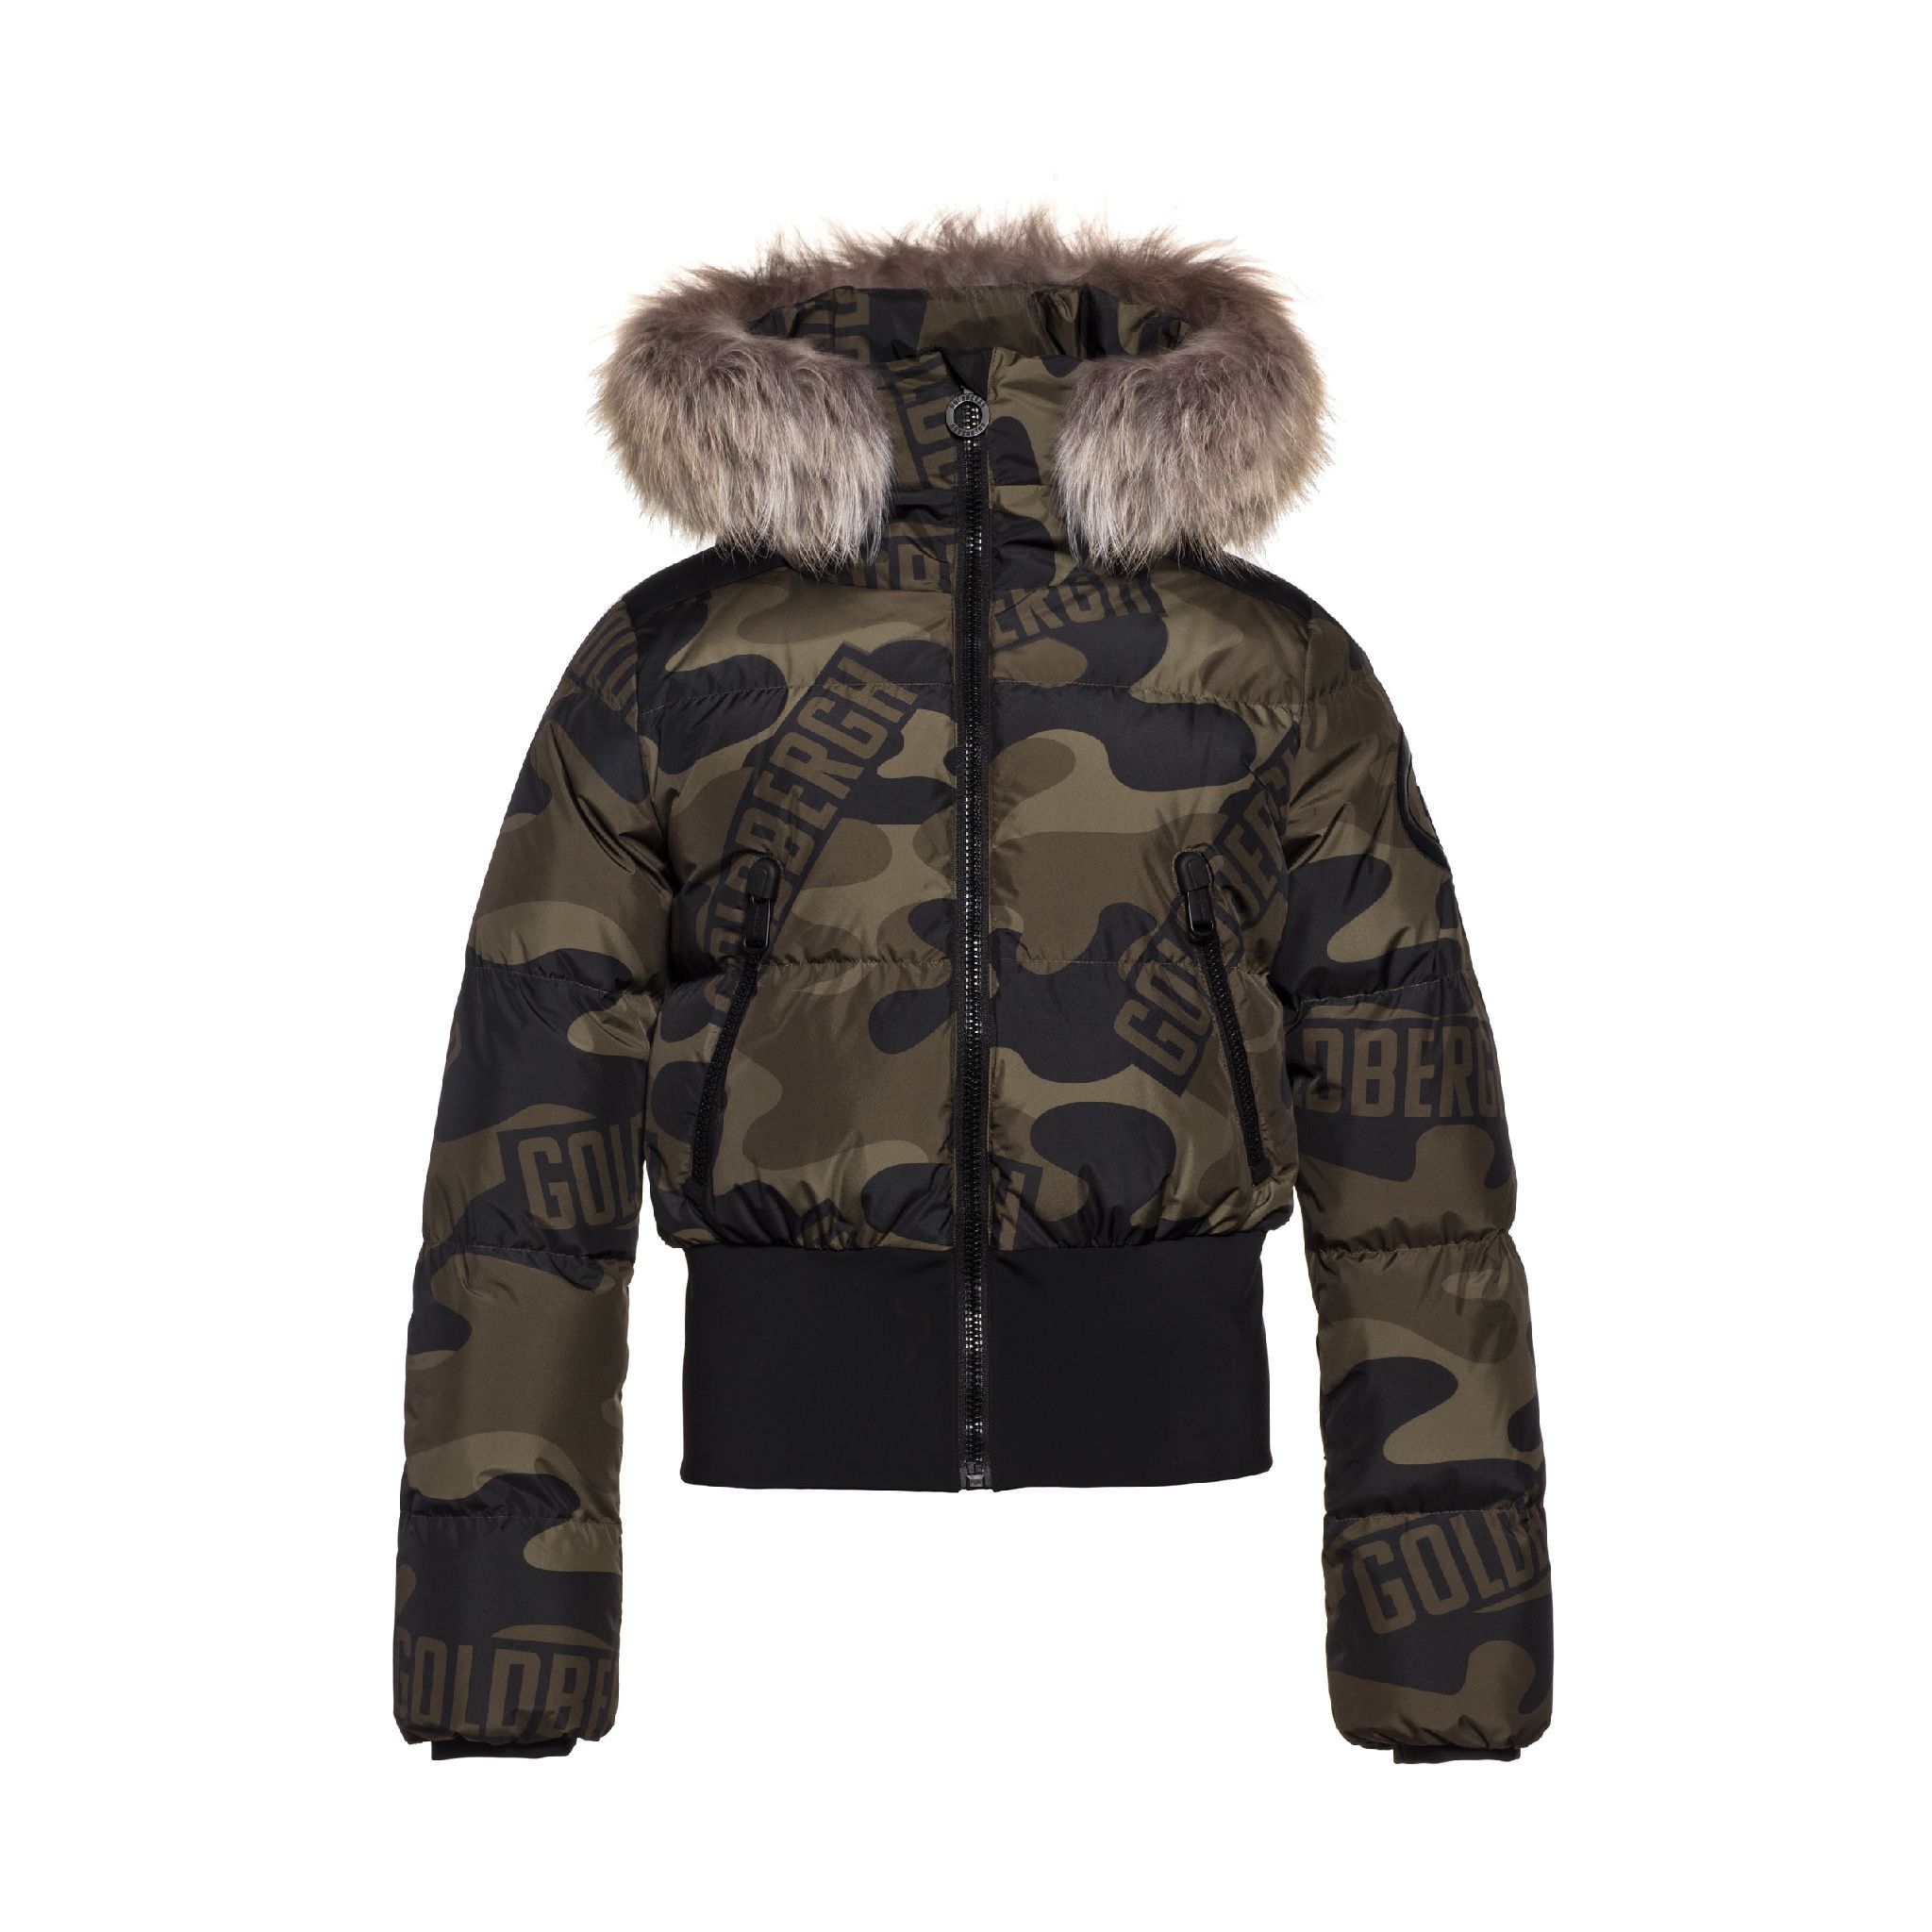 Geci Ski & Snow -  goldbergh AMBUSH Jacket real arctic raccoon fur